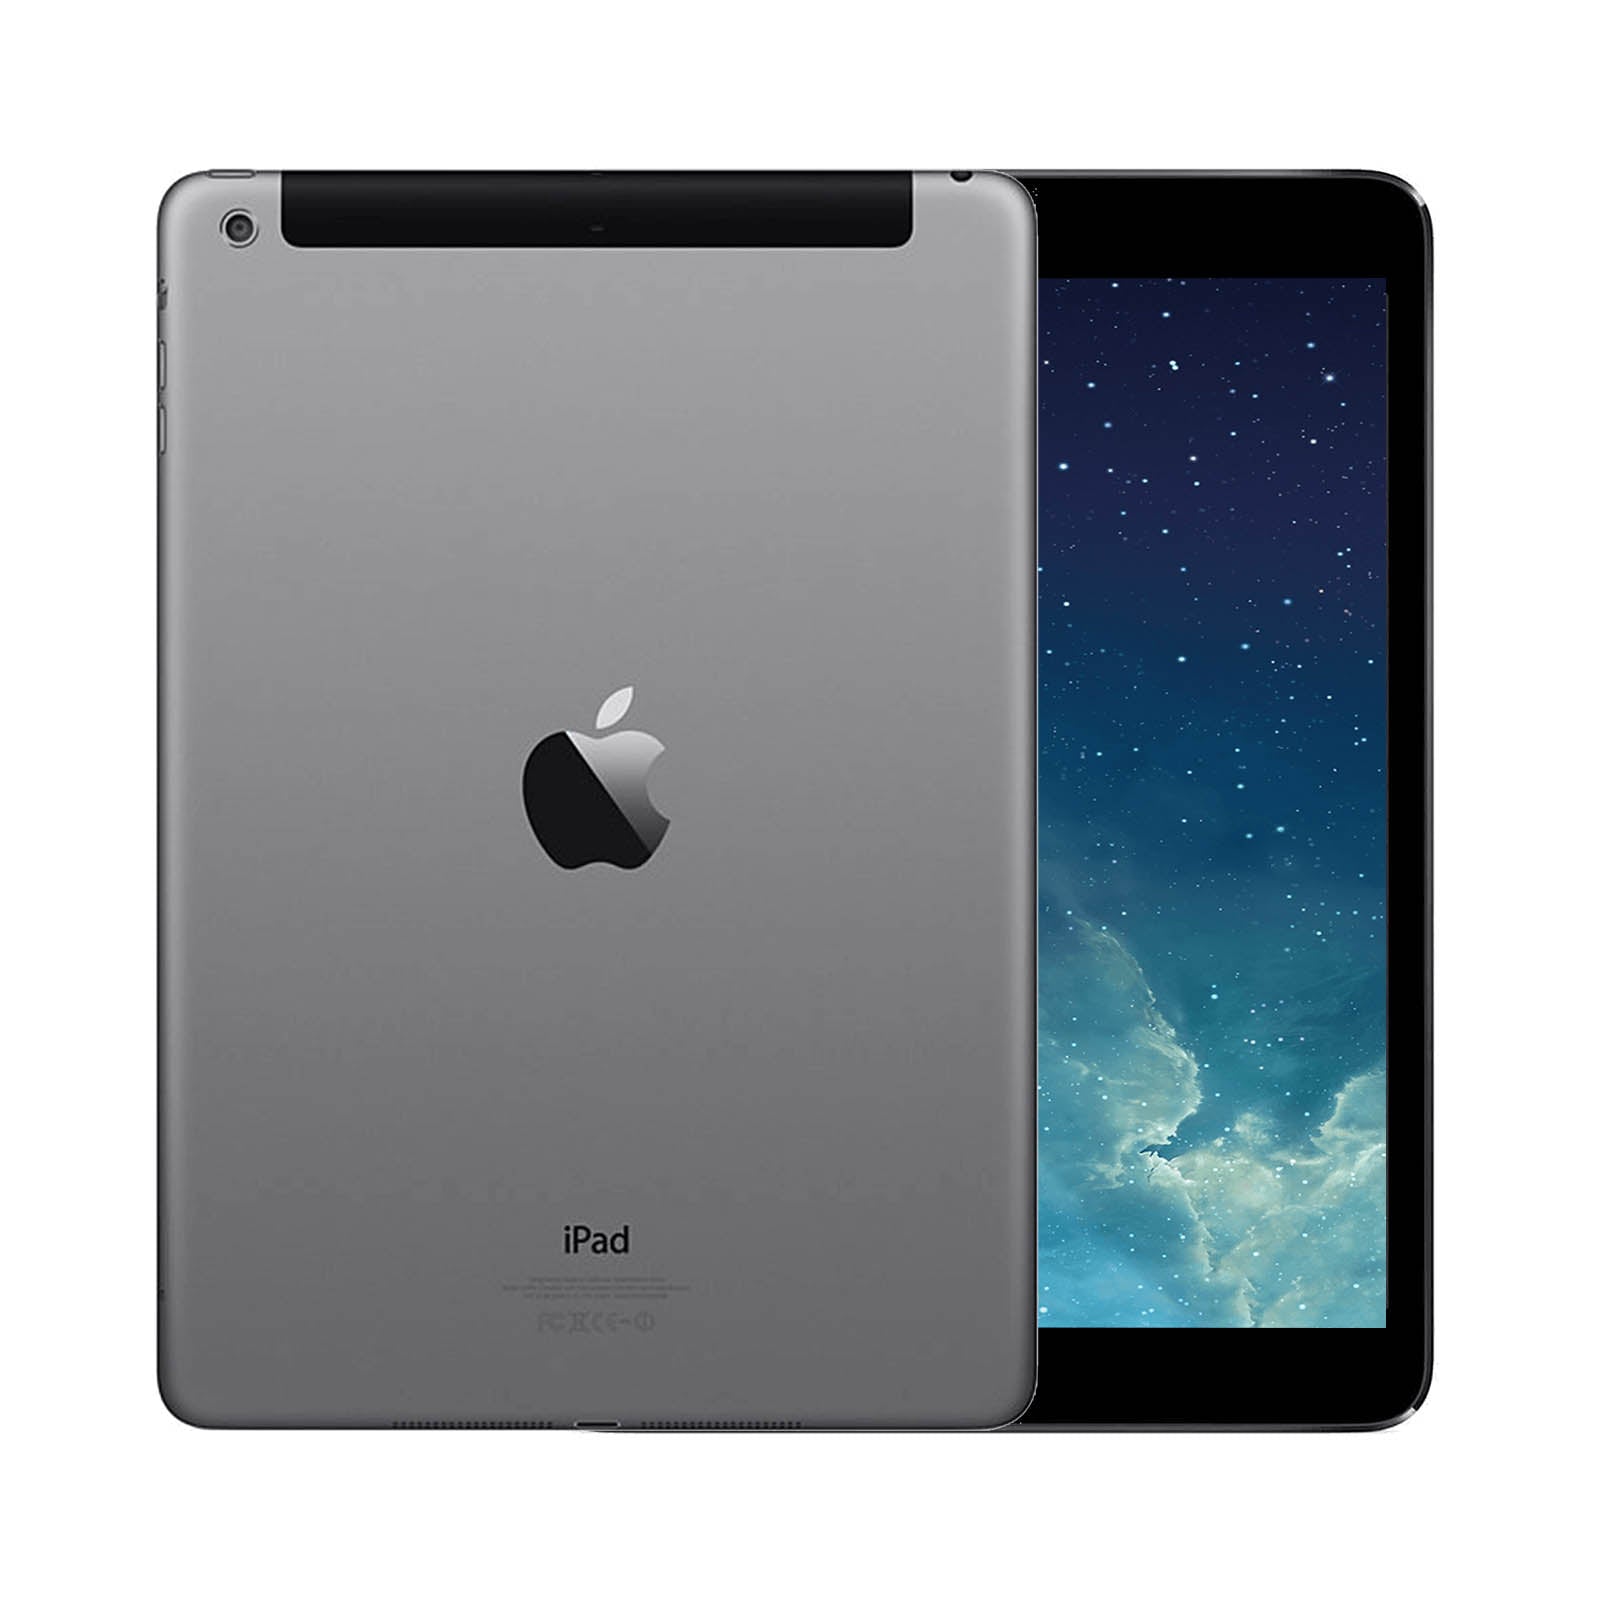 iPad Air 16GB WiFi & Cellular Space Grey Good-Unlocked